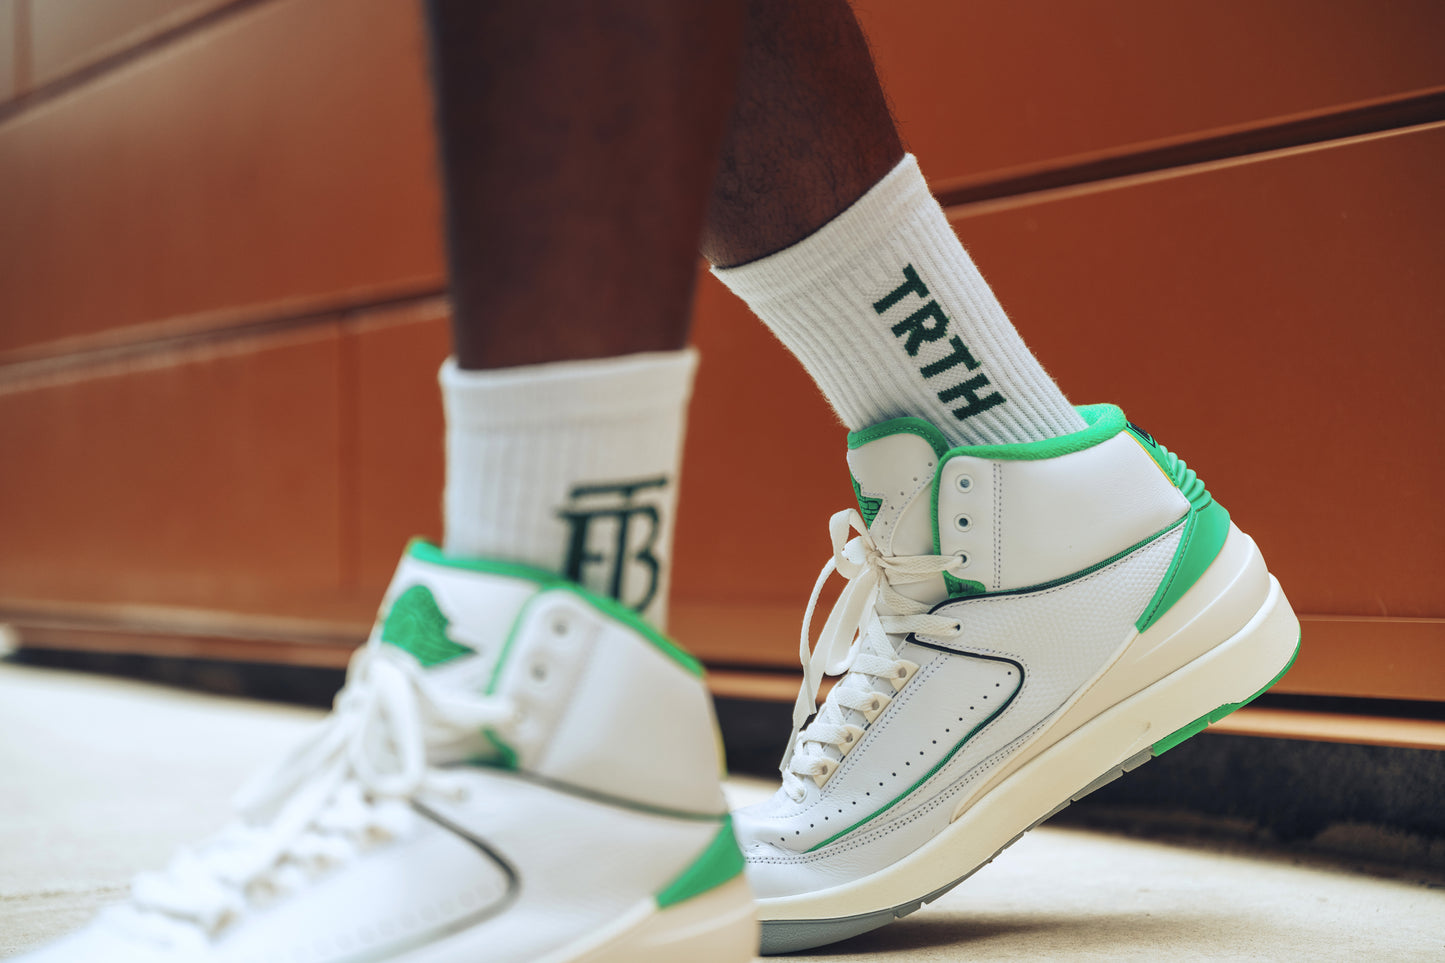 Lifestyle Crew Socks - White/Green